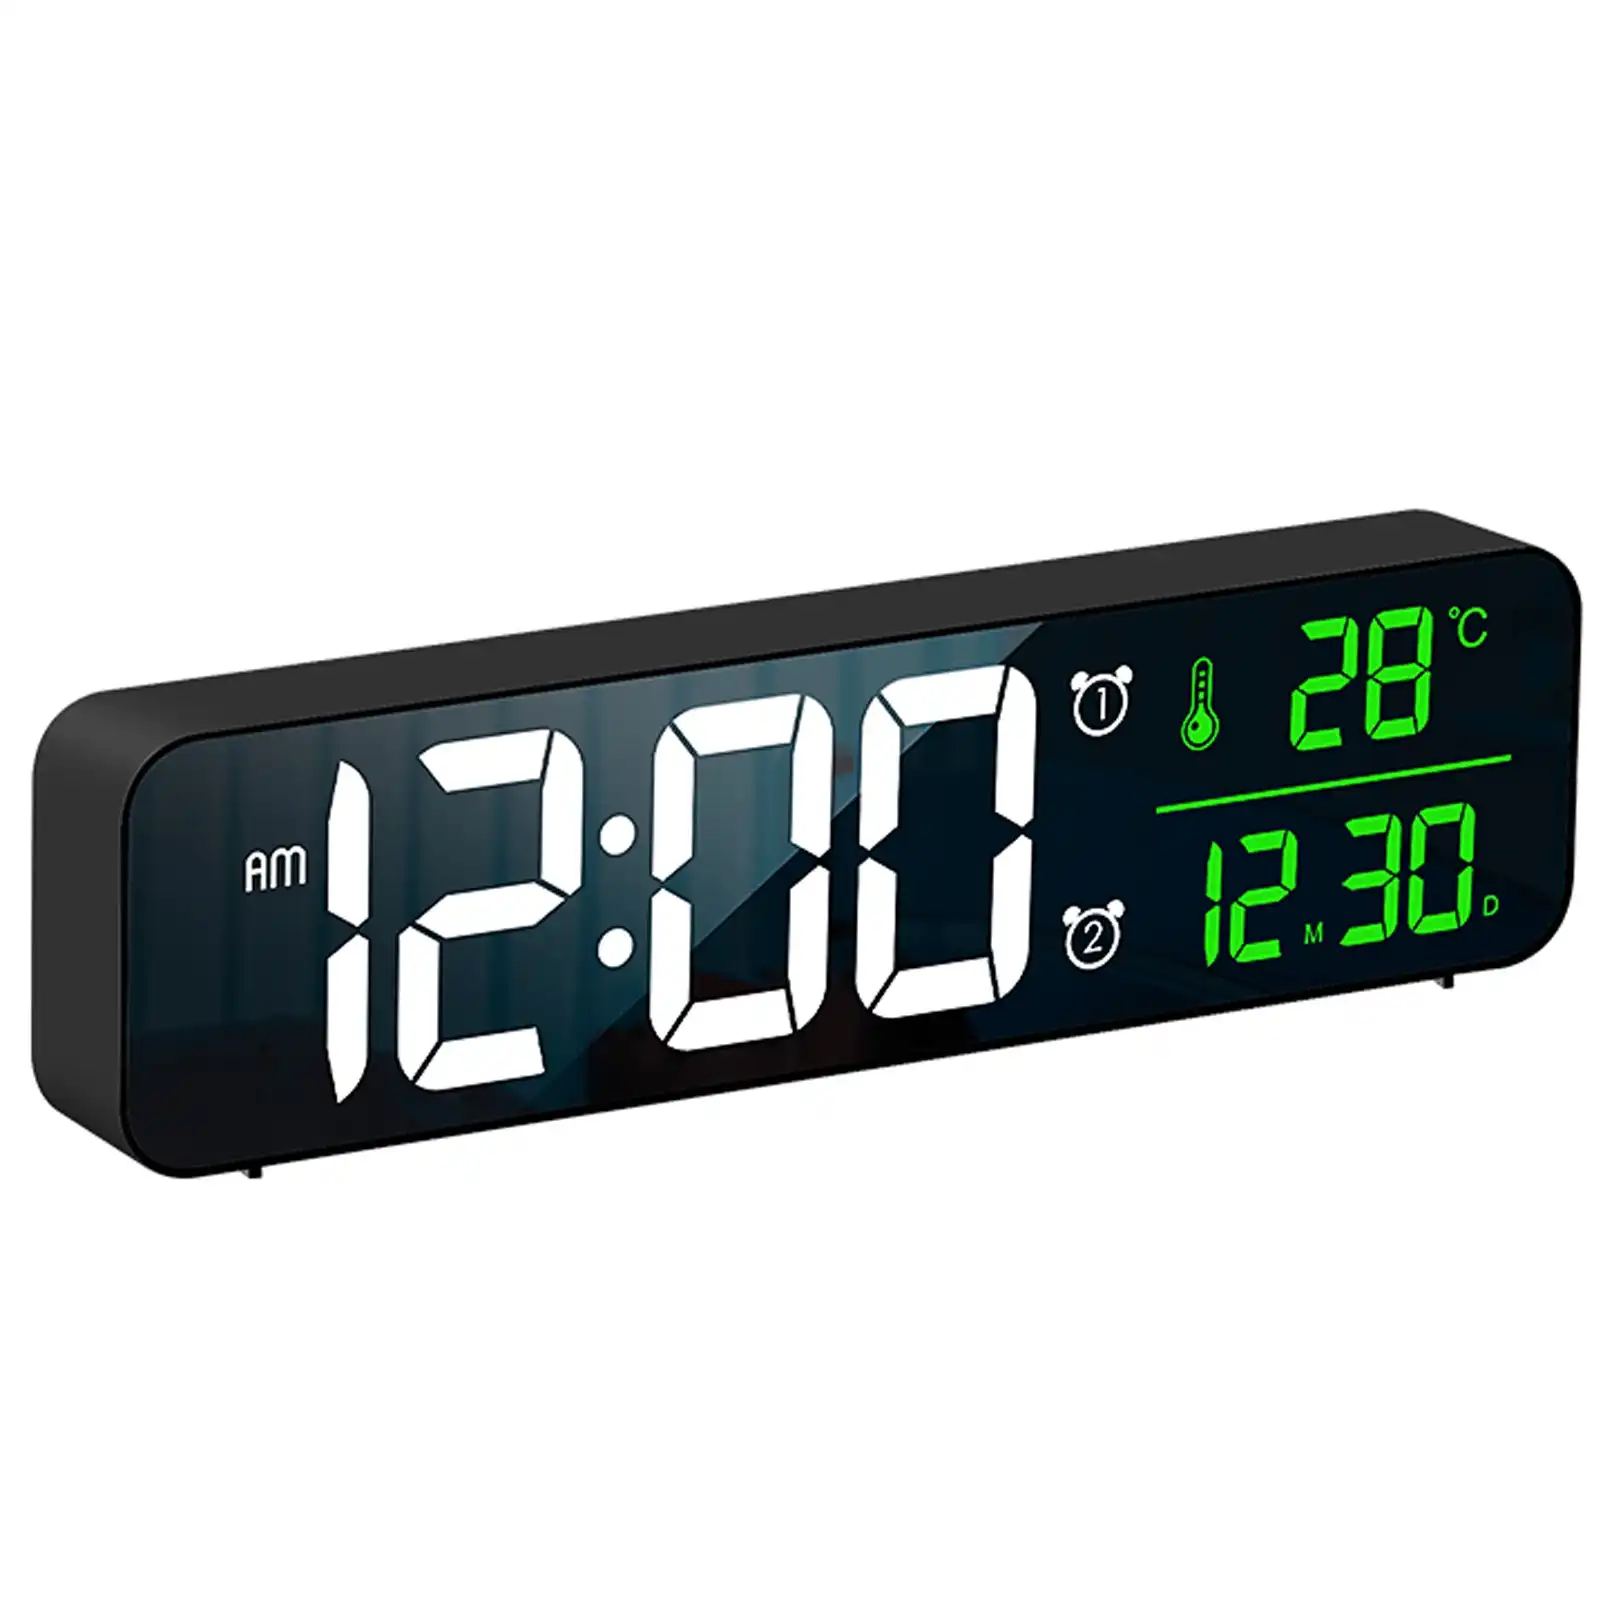 TODO LED Digital Alarm Clock Temperature Music Alarm USB Power Wall Clock - Black